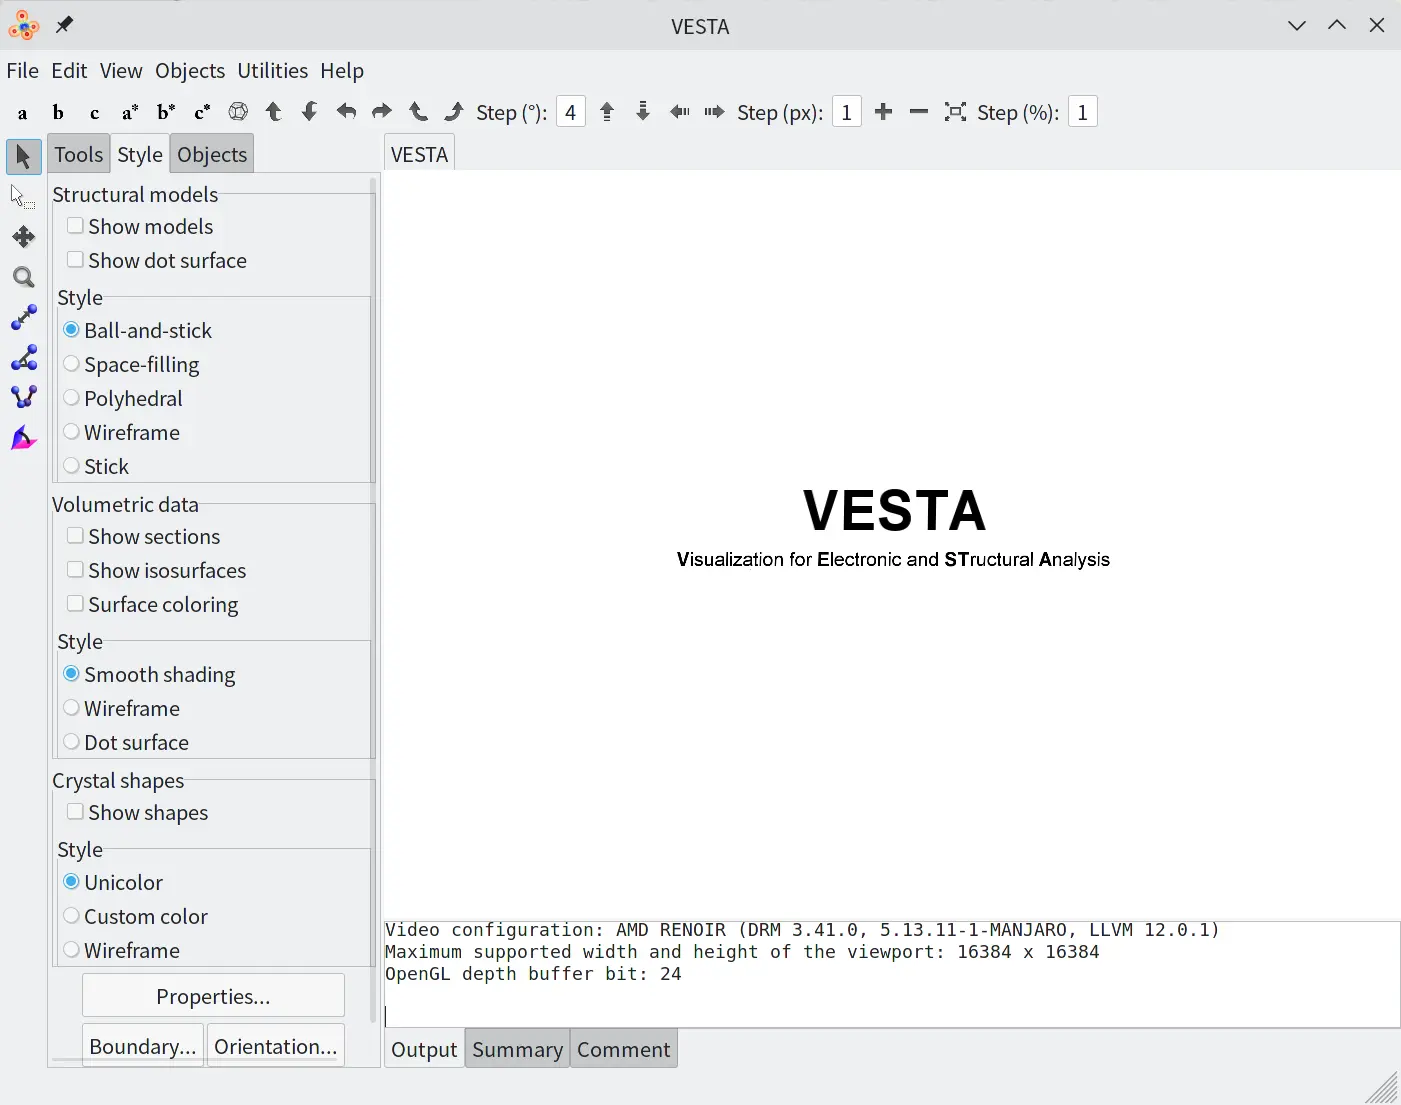 #~/img/vesta-application.webp